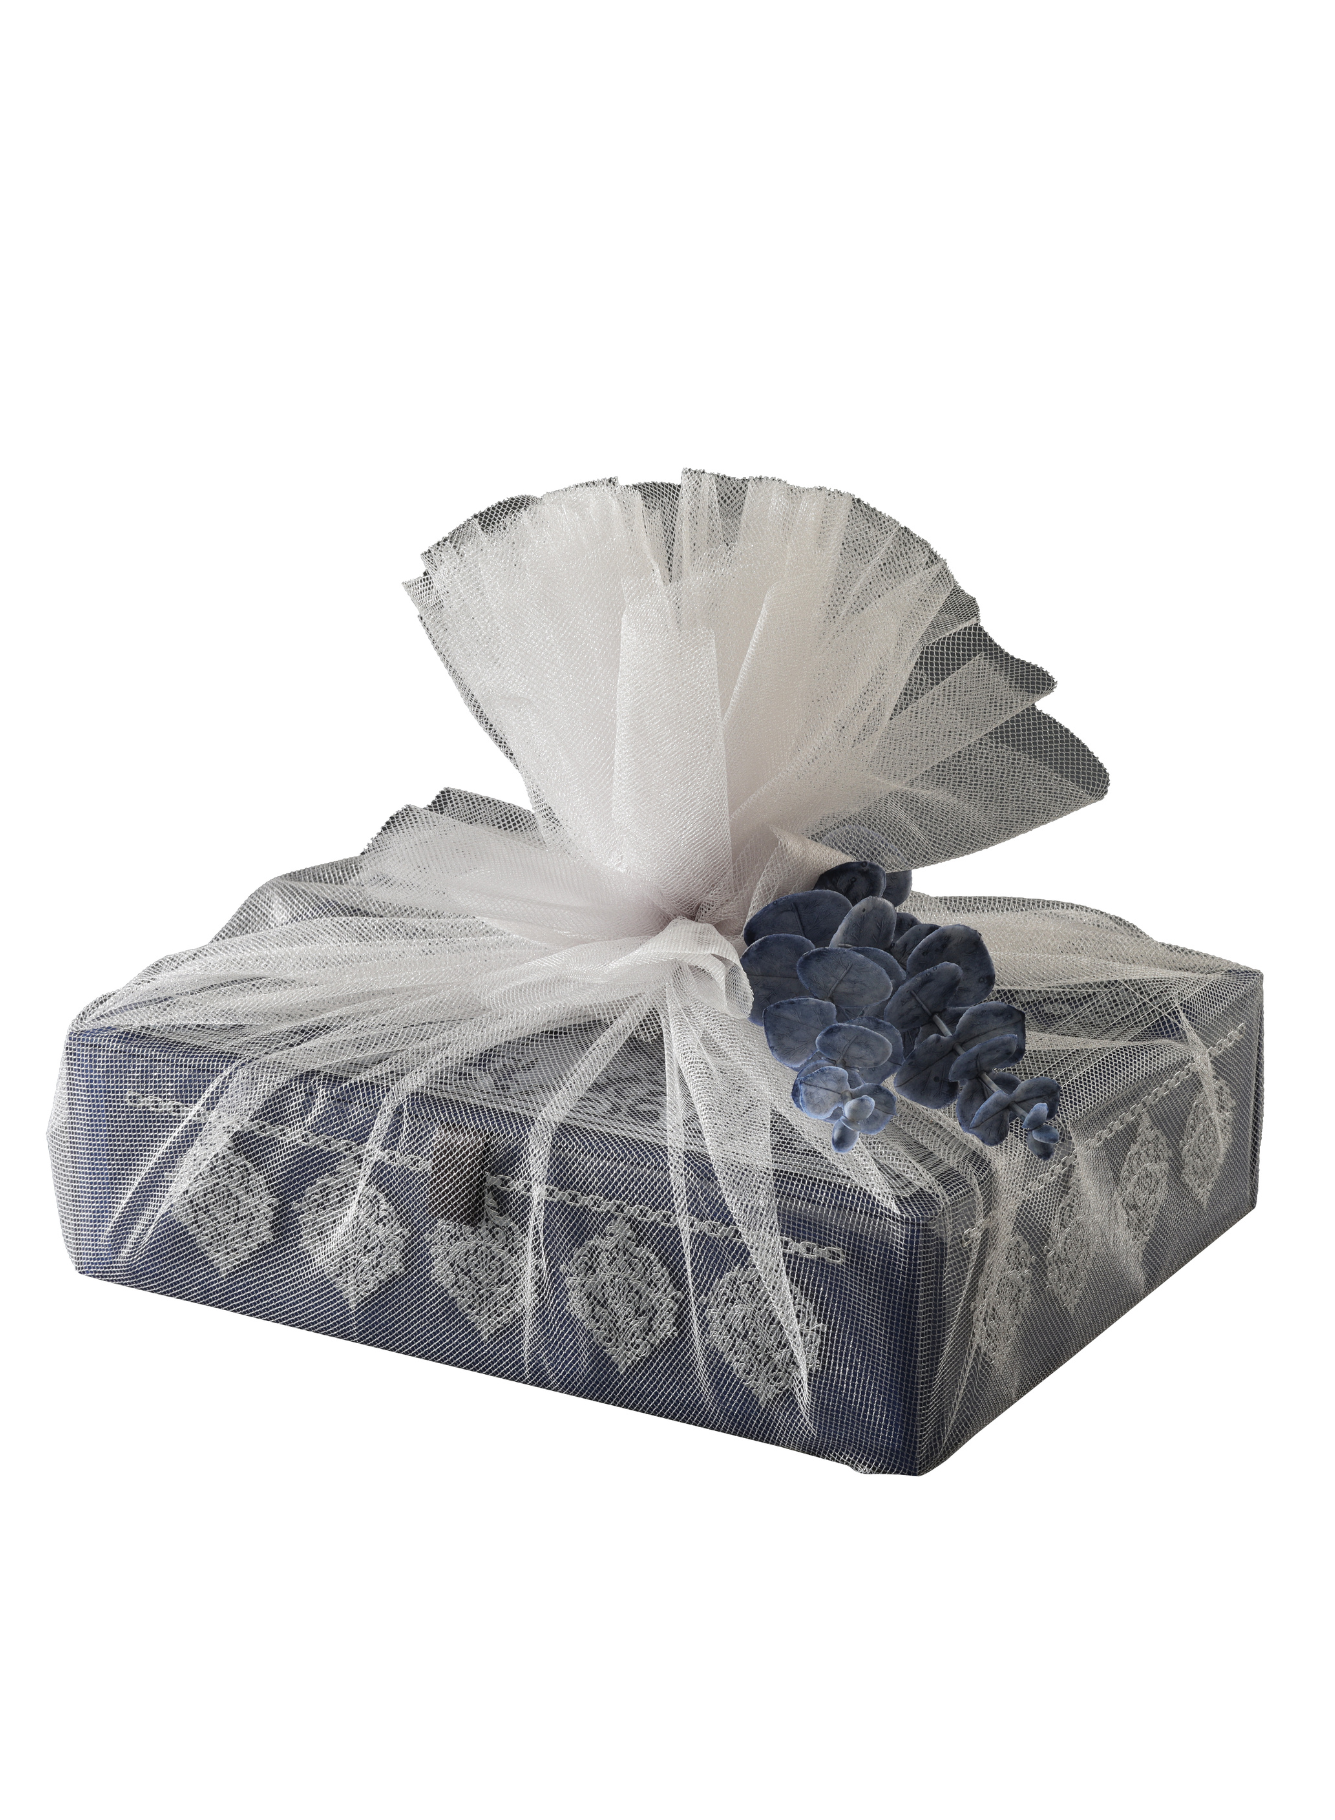 Khidri Dates with The Cinderella Box (30 Individually Wrapped Pcs)